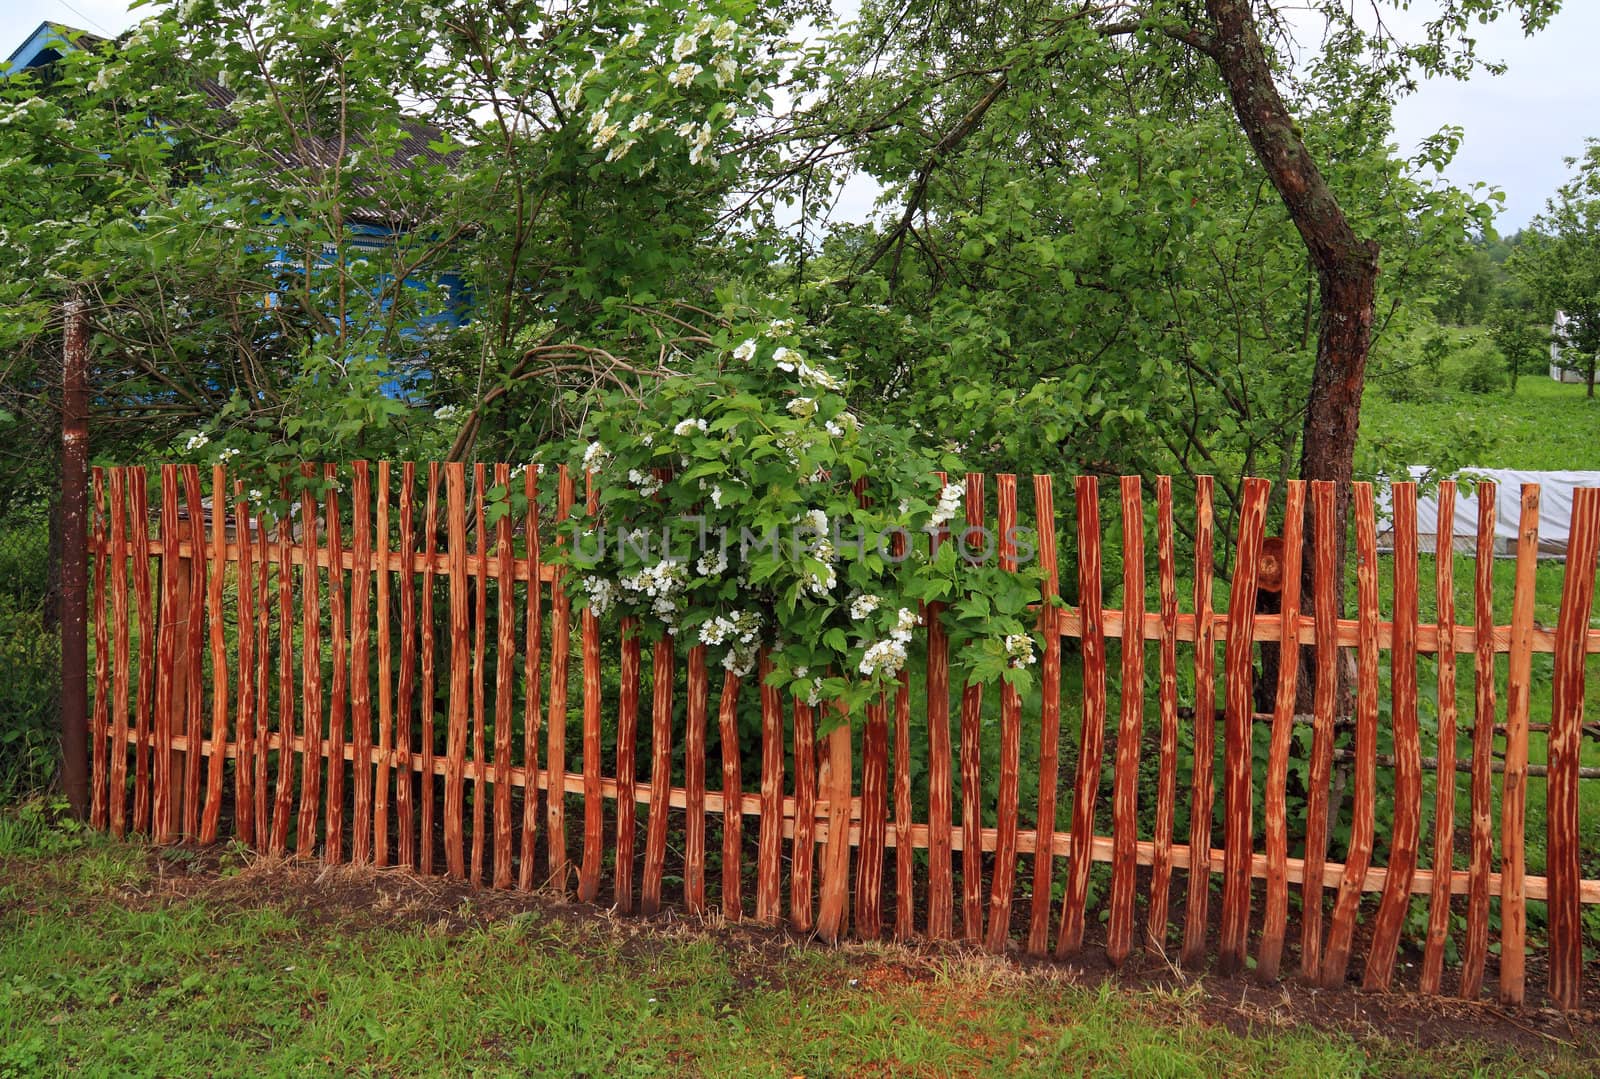 flowering viburnum near wood fence by basel101658